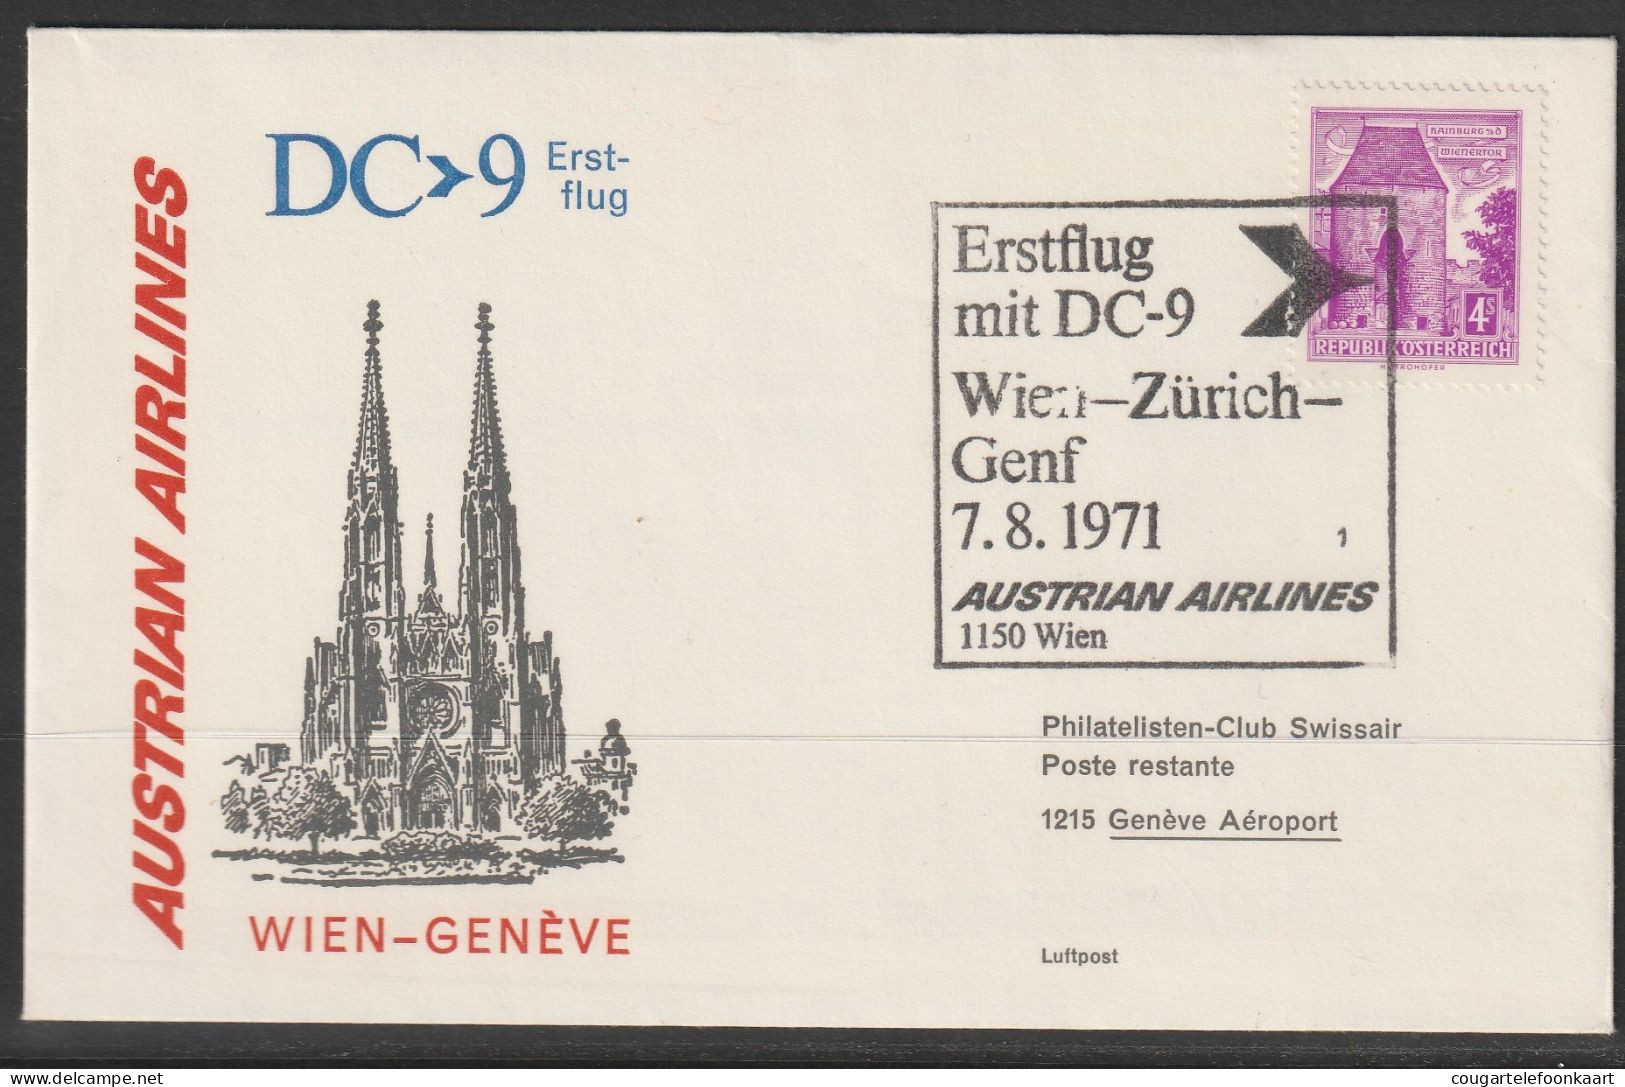 1971, AUA, Erstflug, Wien - Genf - First Flight Covers